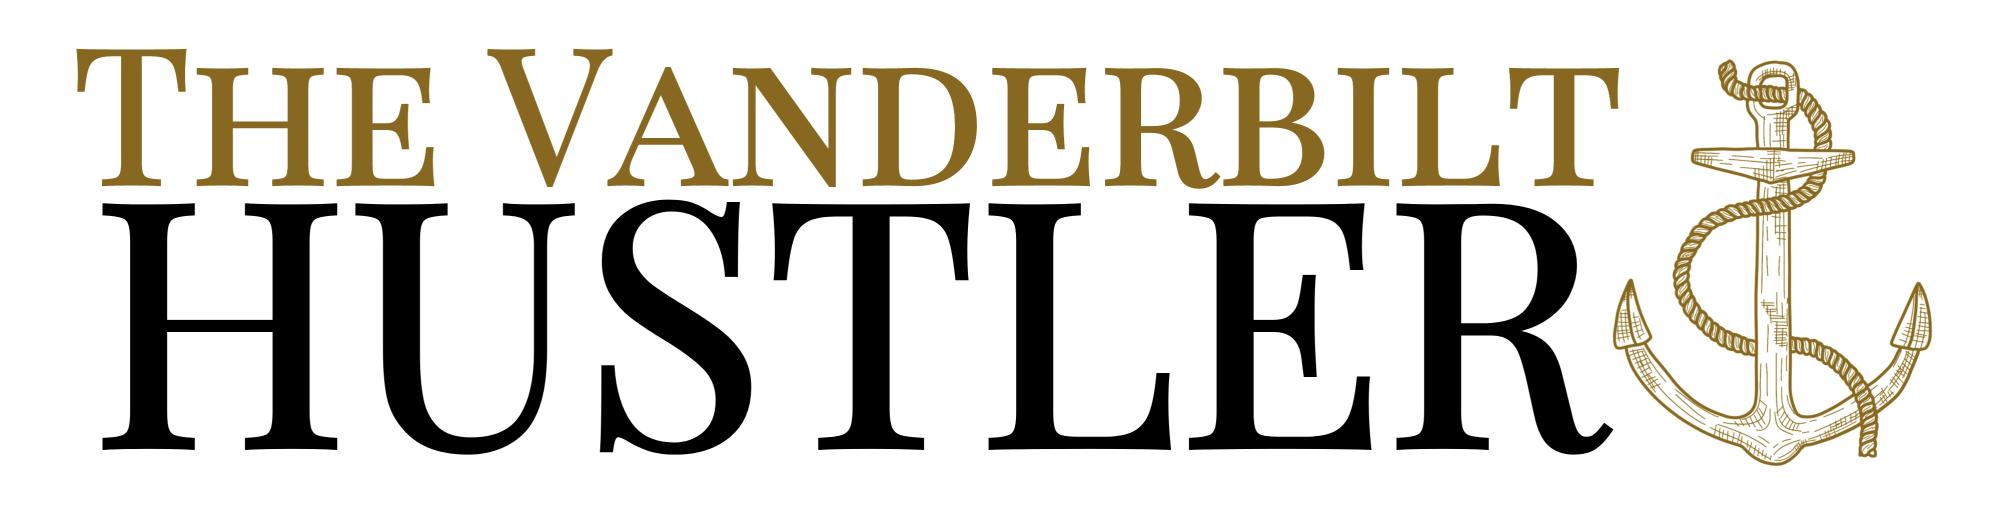 The official student newspaper of Vanderbilt University